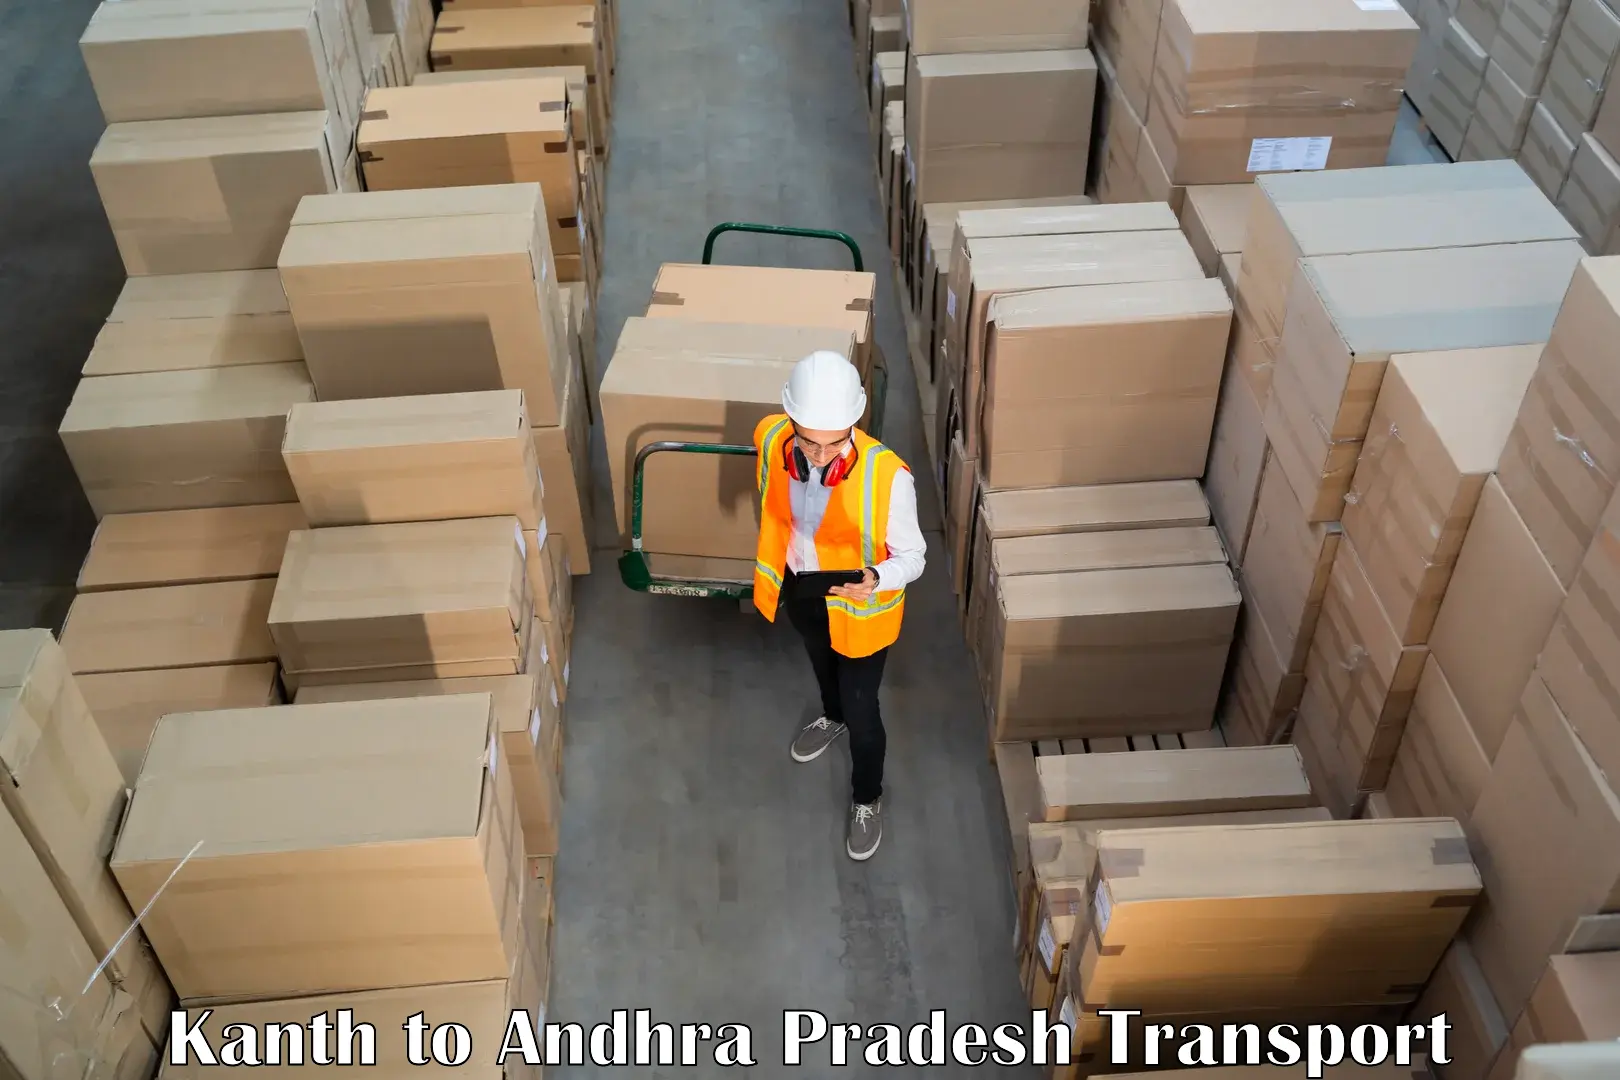 Truck transport companies in India Kanth to Annavaram